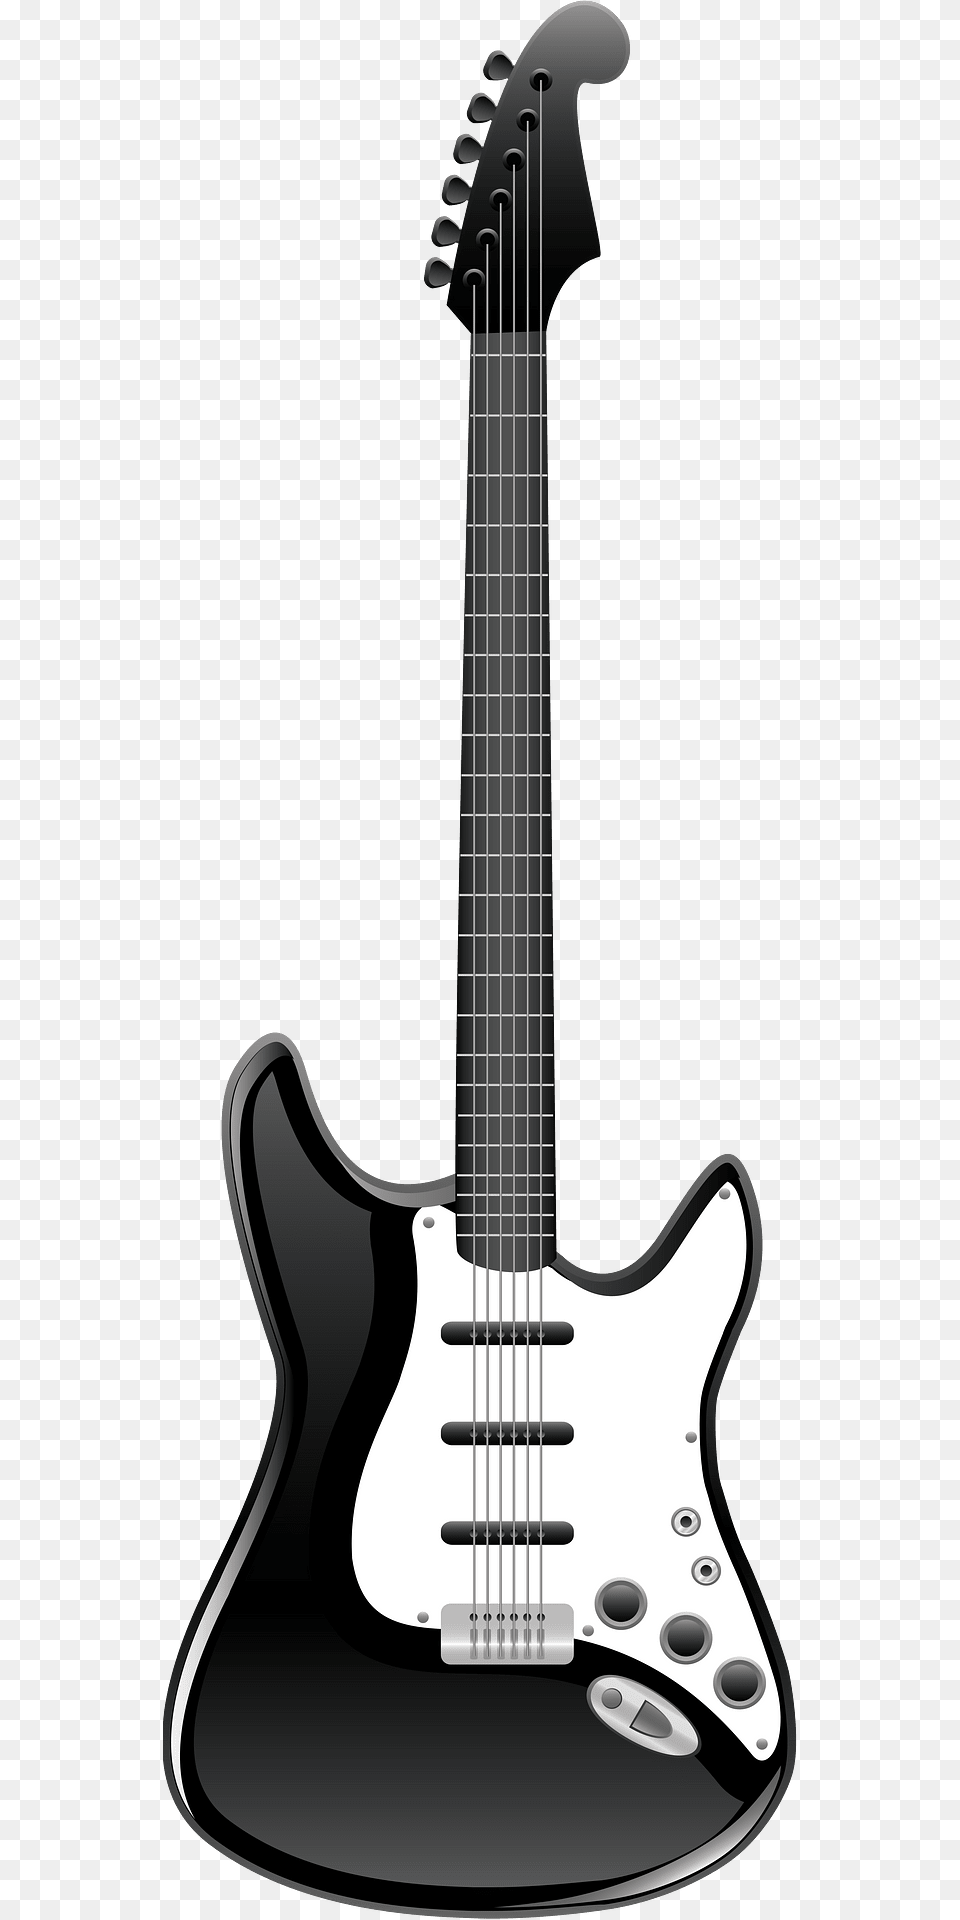 Guitar Clipart, Electric Guitar, Musical Instrument, Bass Guitar Png Image